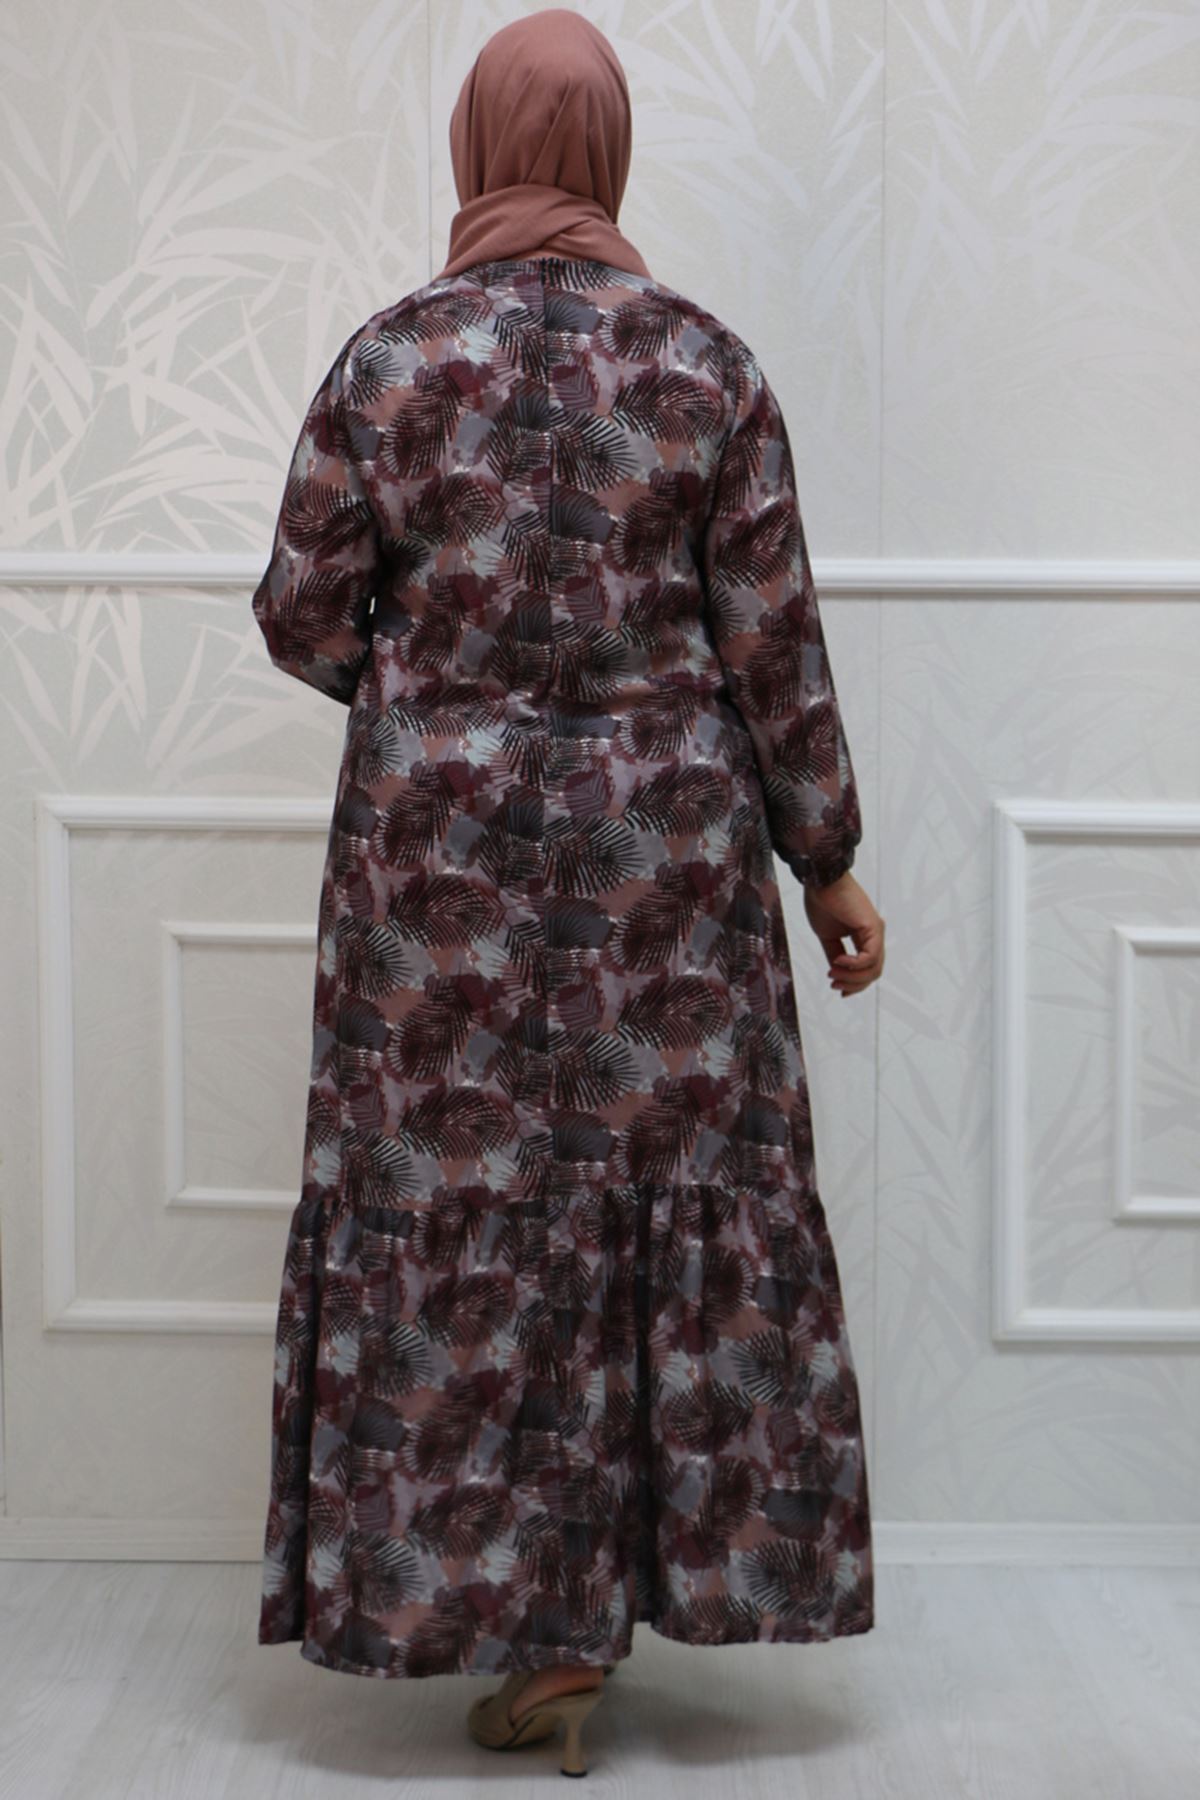  32041 Plus Size Skirt Frilly Patterned Jesica Dress-Leaf Pattern Purple